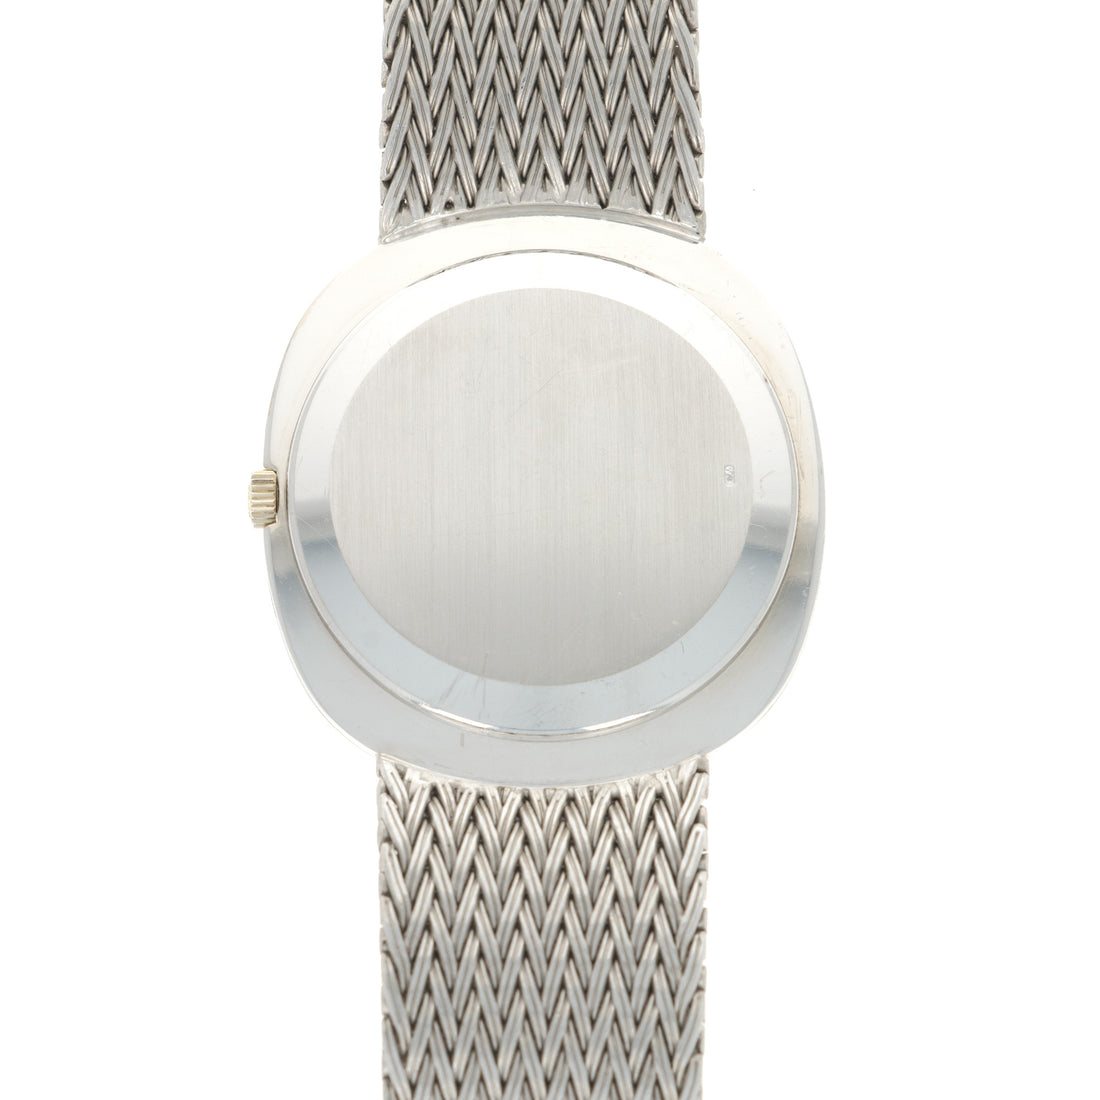 Patek Philippe White Gold Automatic Oval Bracelet Watch Ref. 3589